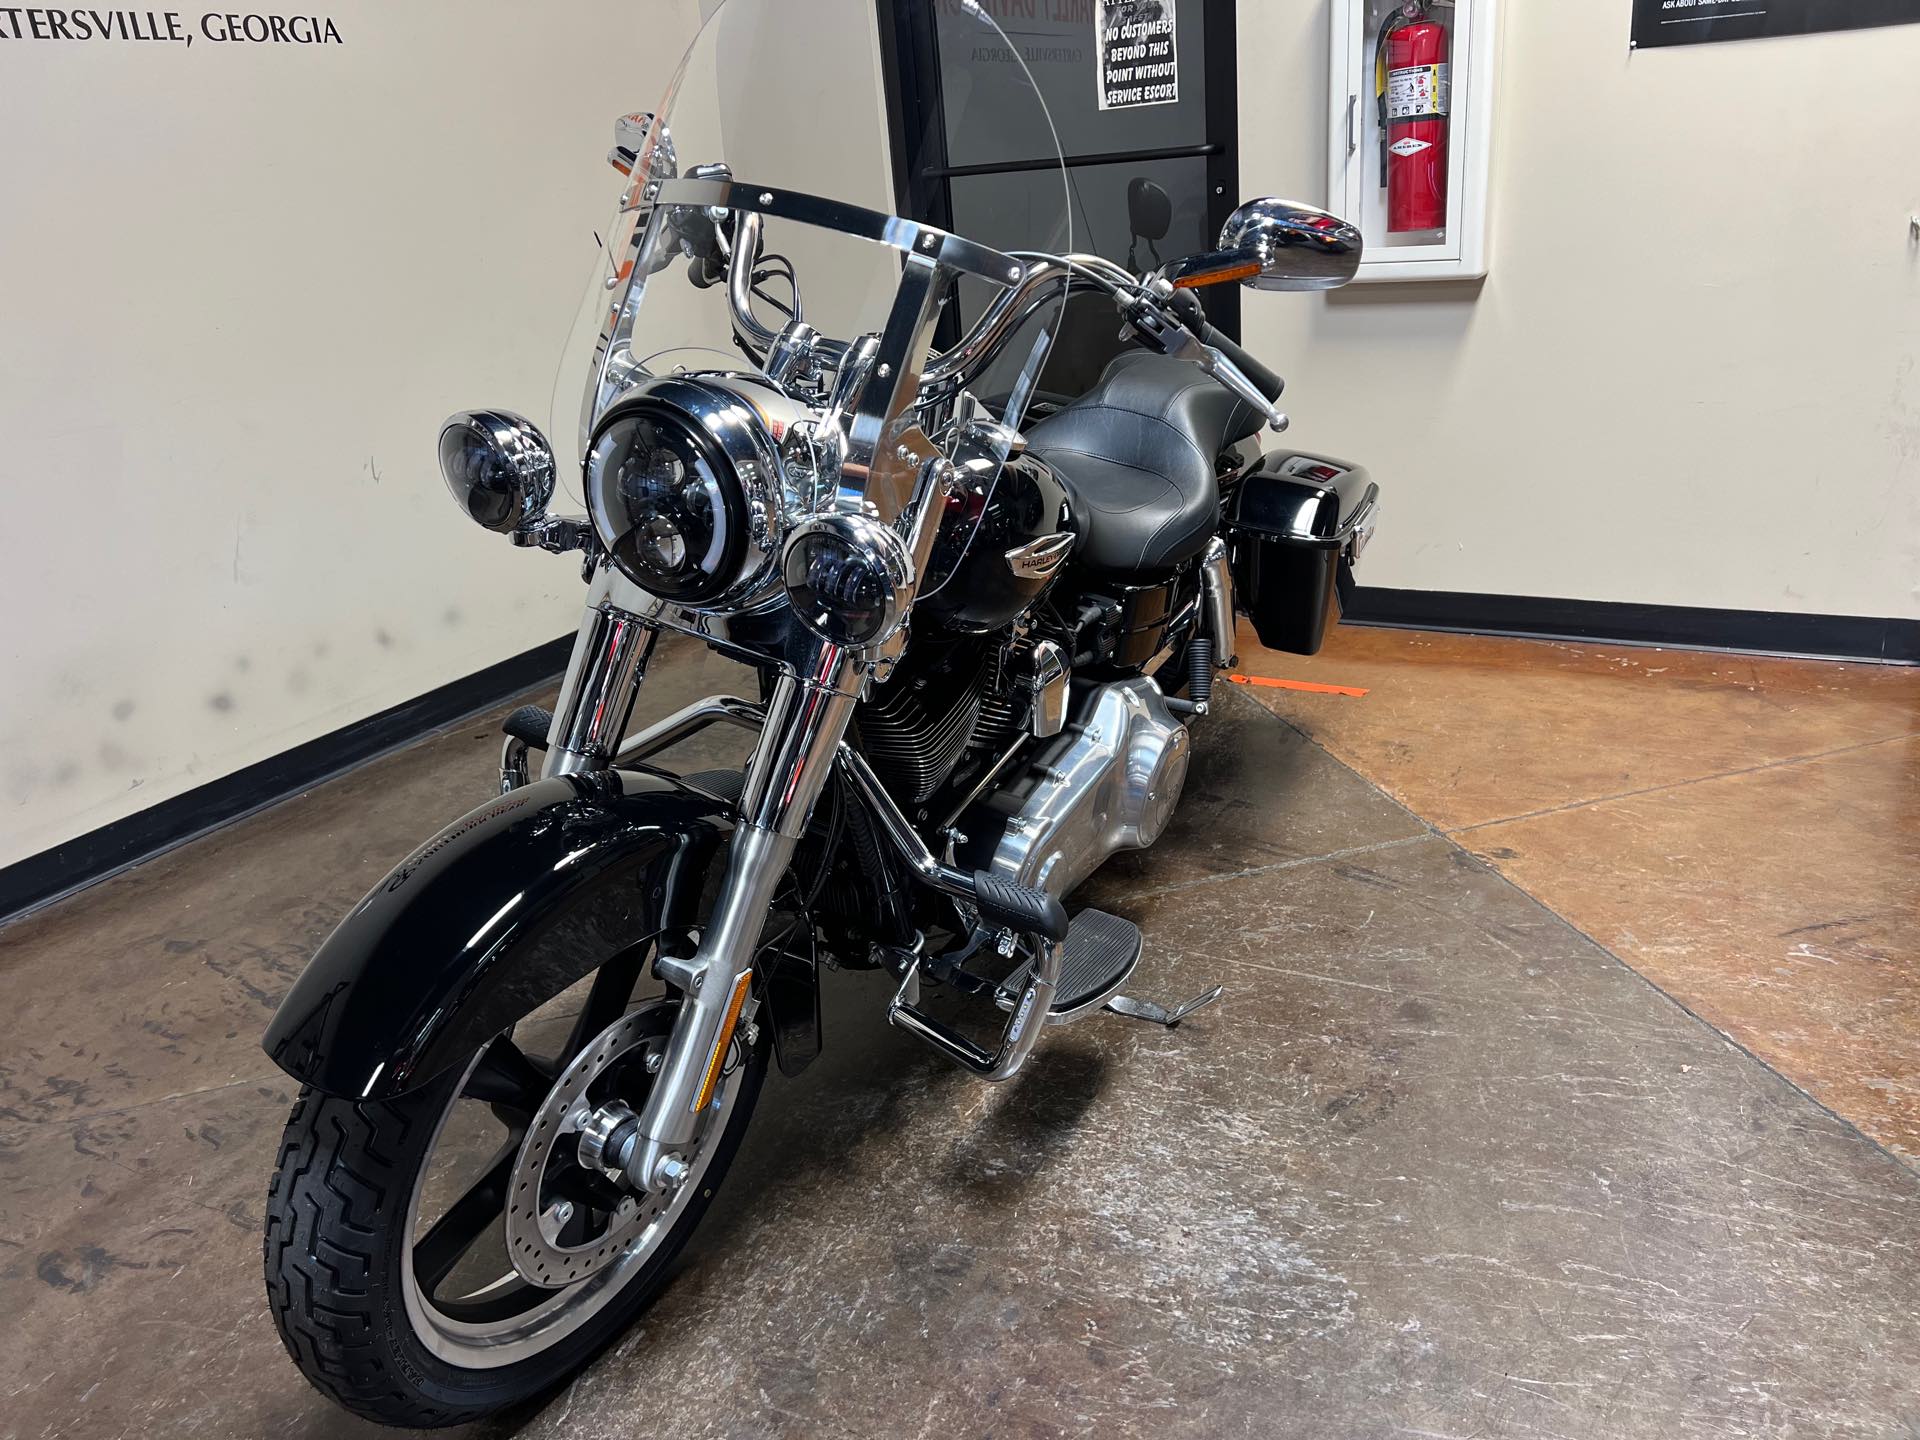 2016 Harley-Davidson Dyna Switchback at Southern Devil Harley-Davidson